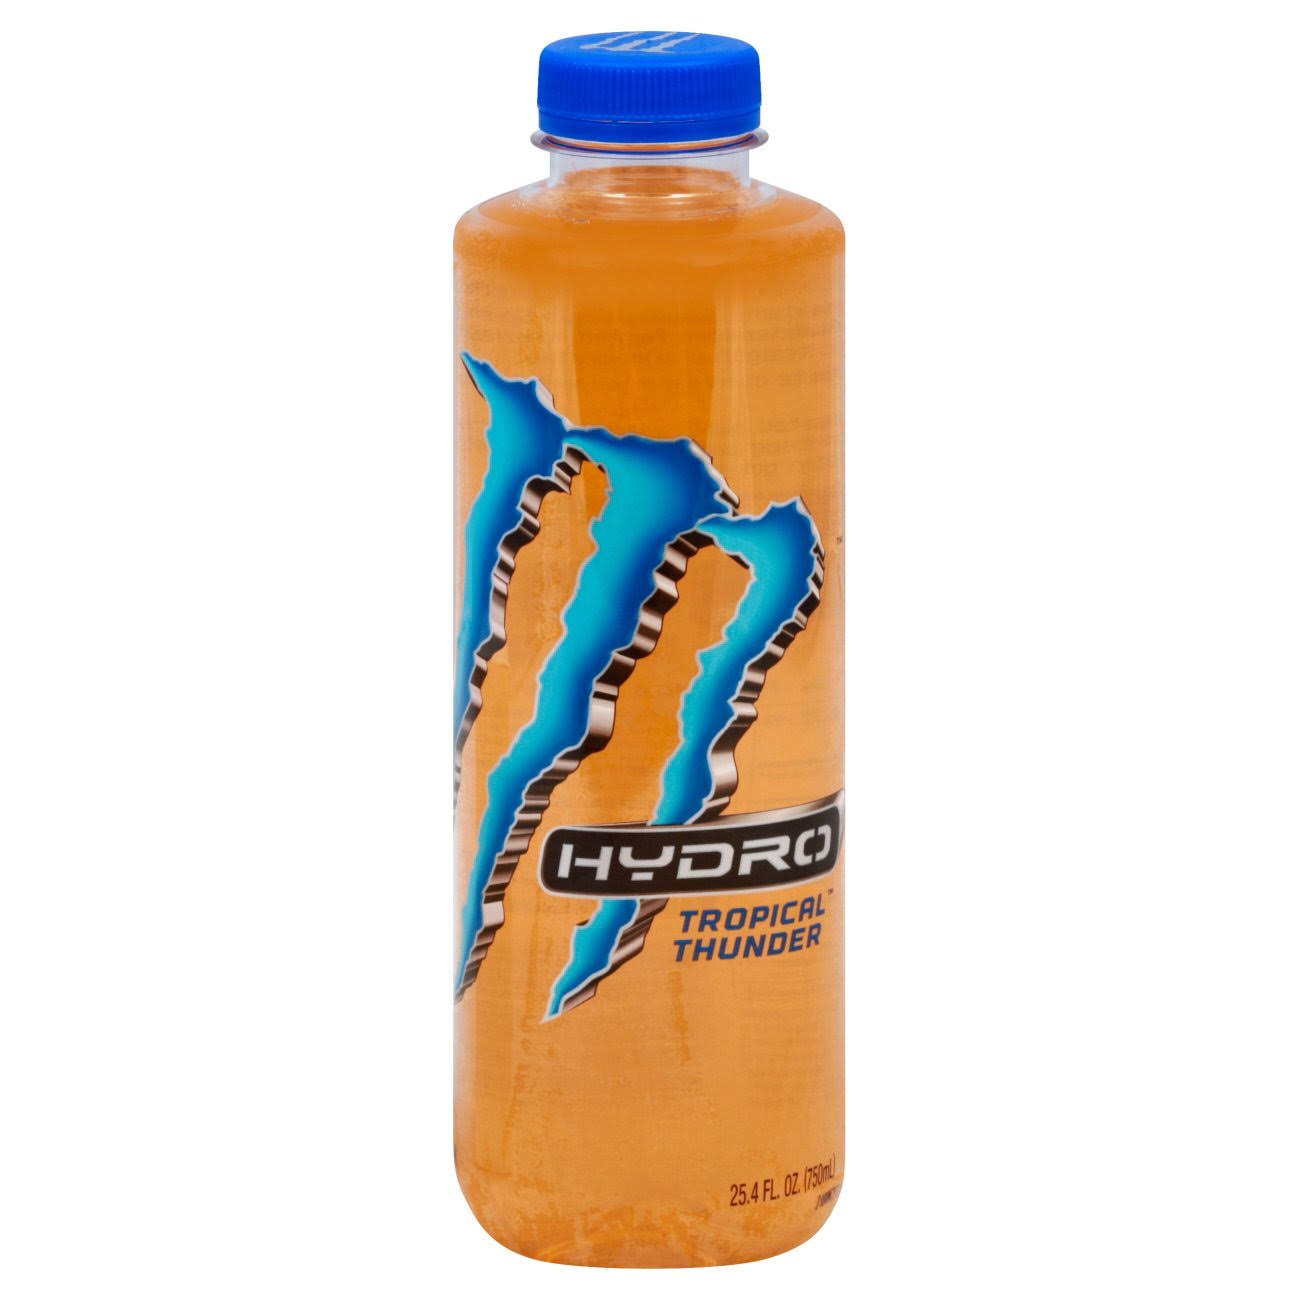 Monster Hydro 070847030911 Tropical Thunder Energy Drink, 25.4 FL oz